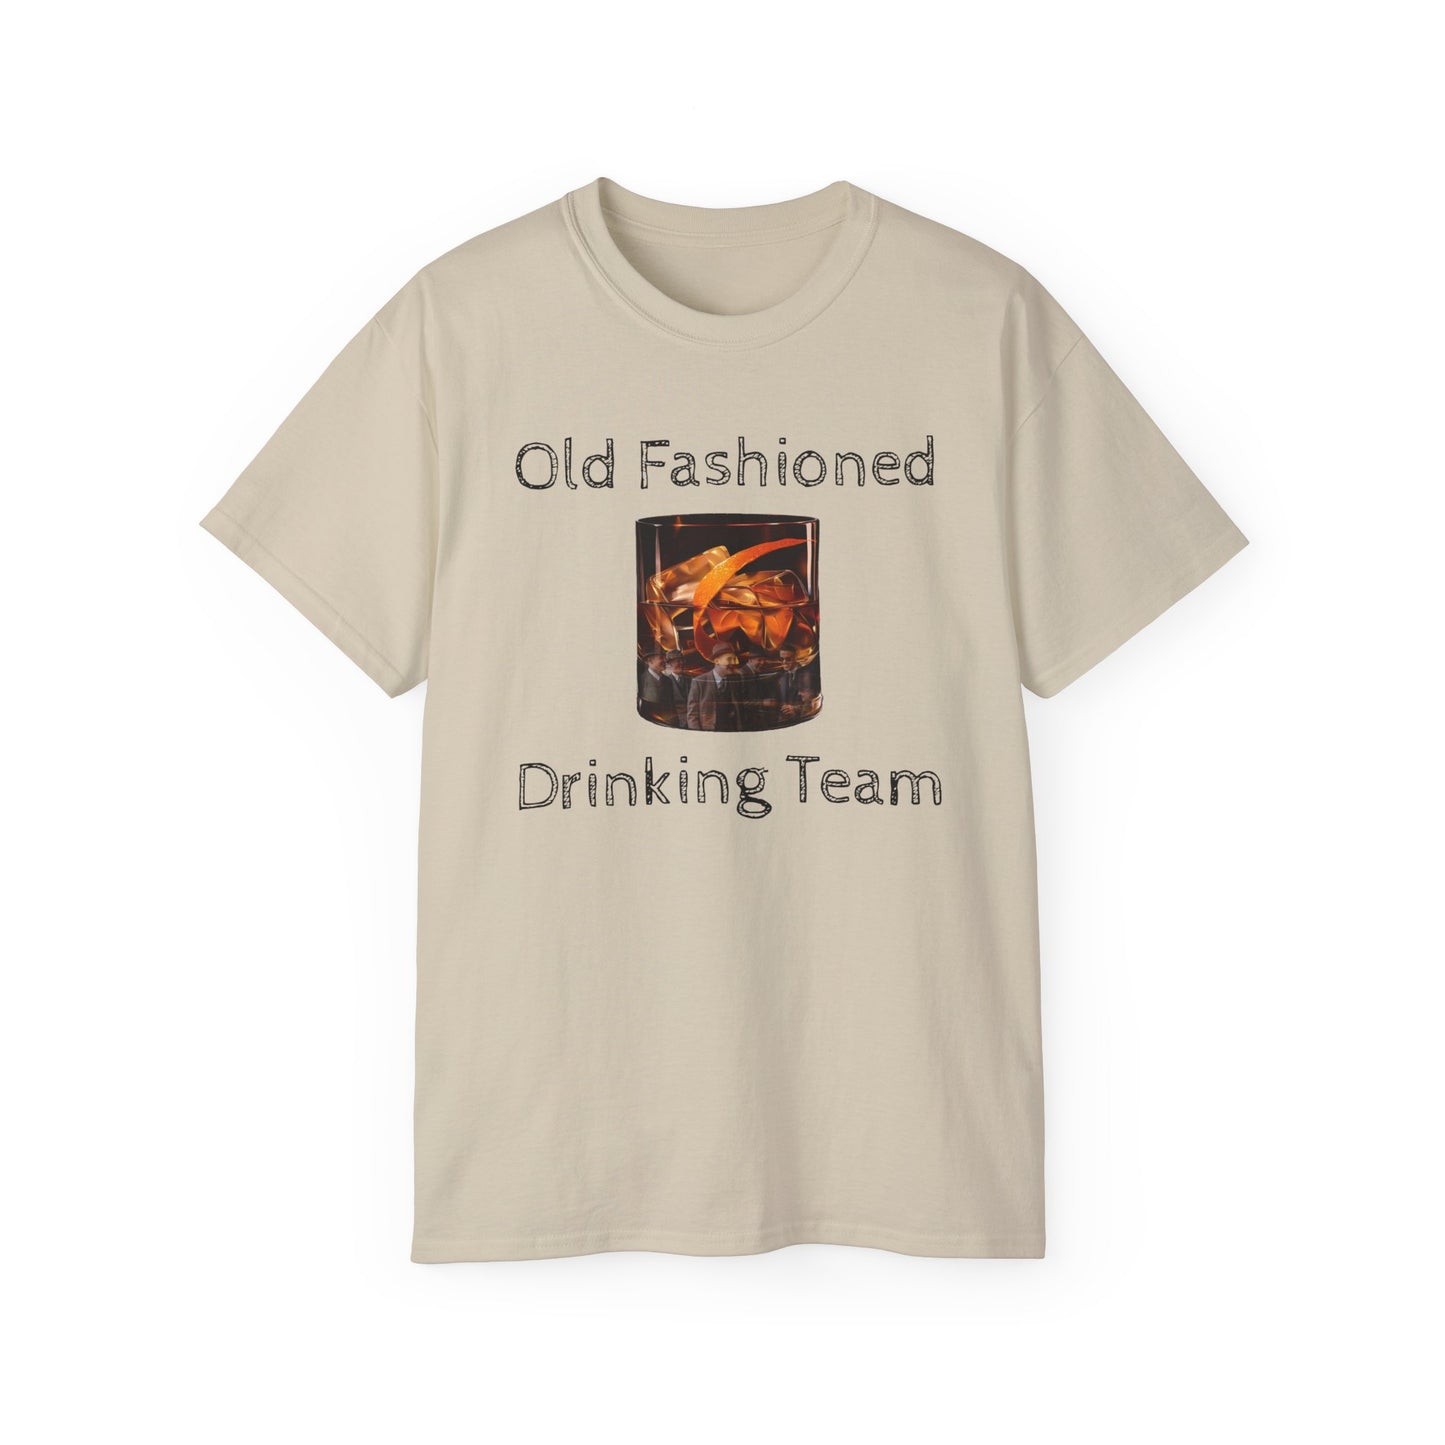 Old Fashioned T-shirt, bourbon Tshirt, Original Design, Whiskey Tee, Drinking Team, Call Me Old Fashioned